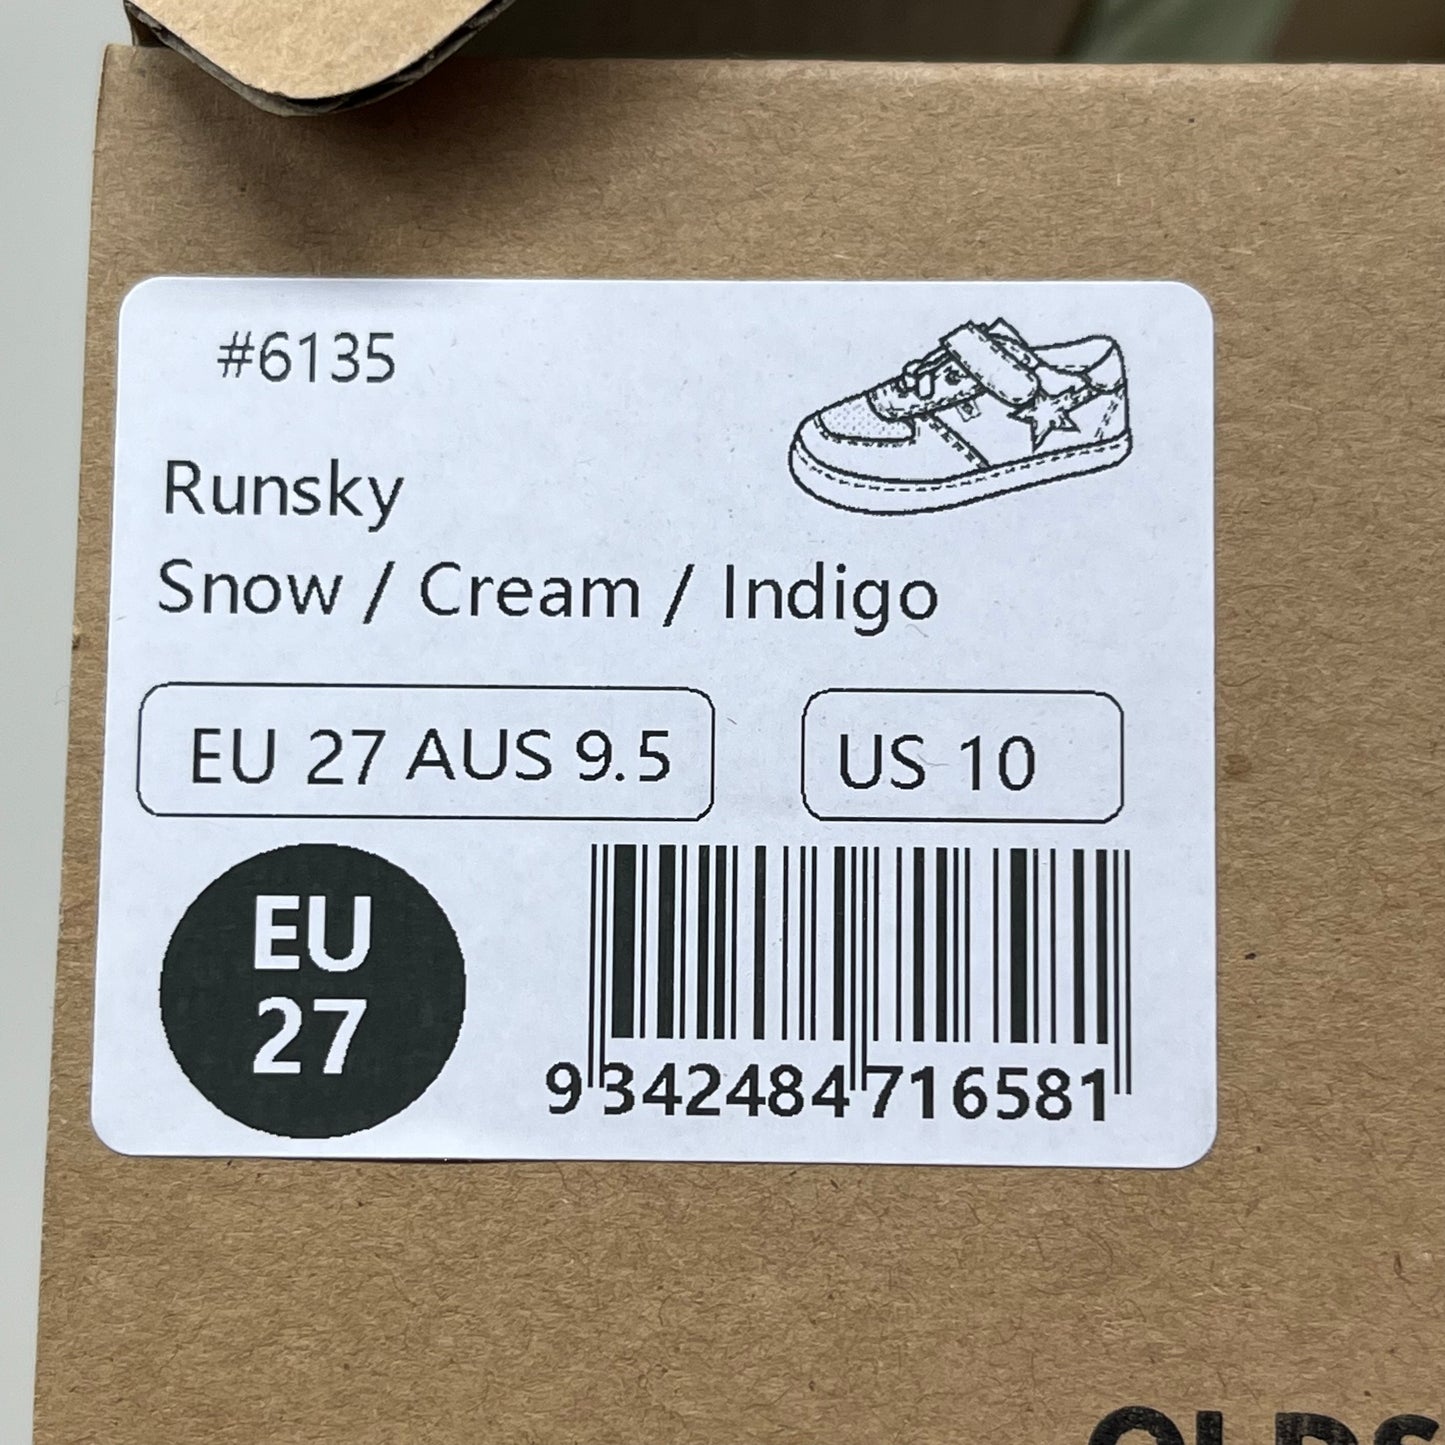 OLD SOLES Runsky Sneakers Leather Shoe Kid’s Sz 27 US 10 Cream/Indigo/Snow #6135